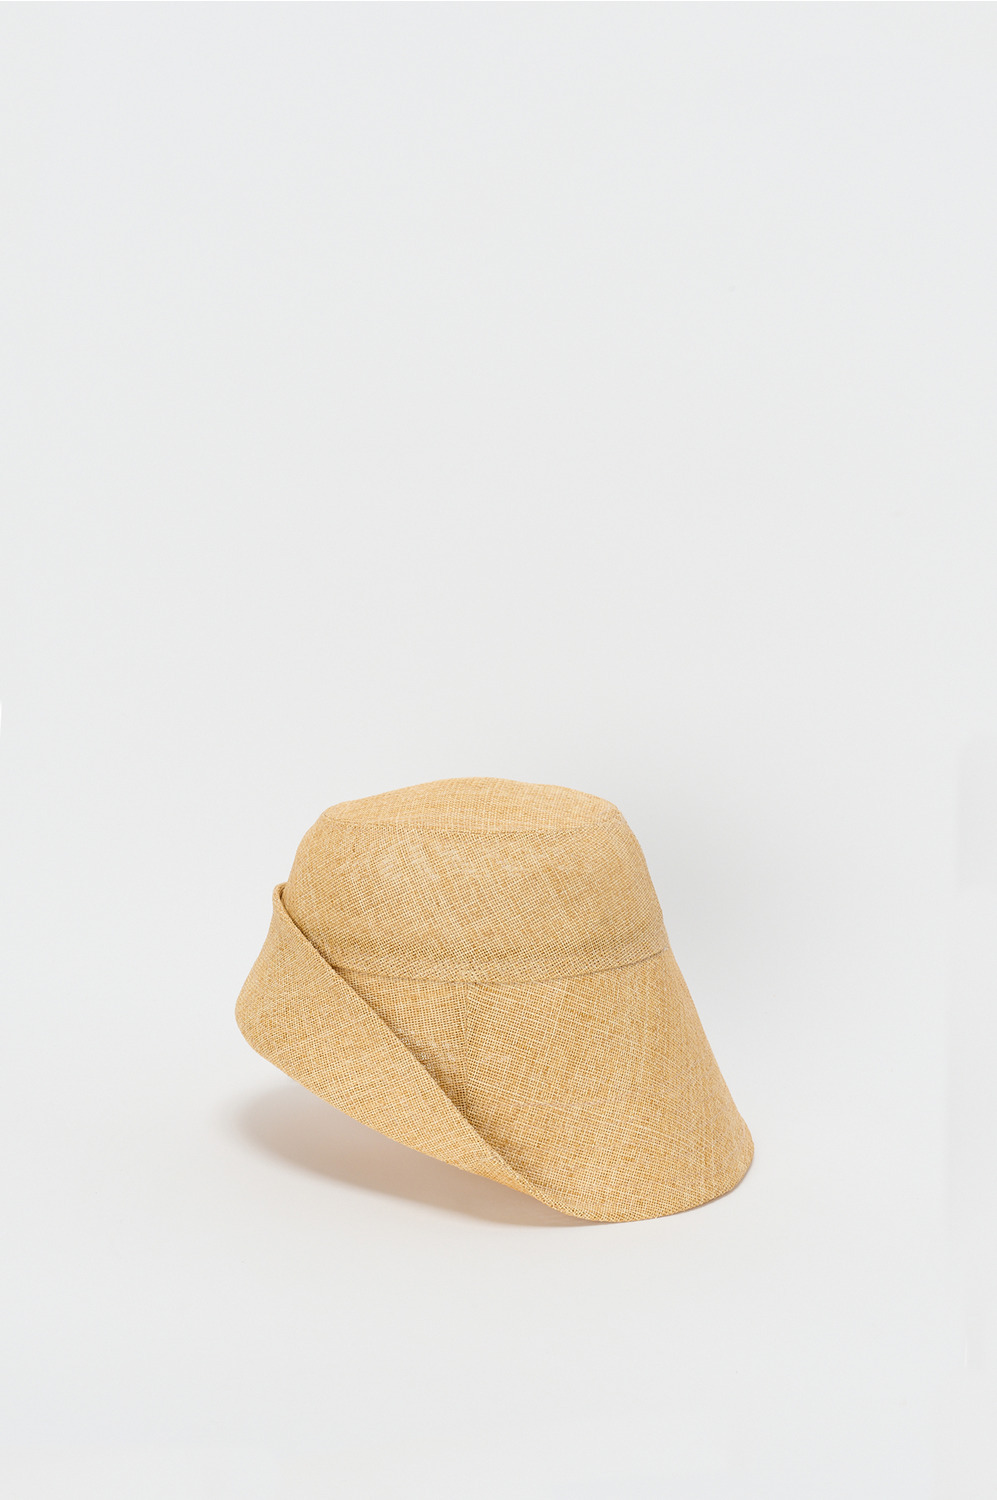 paper sun hat